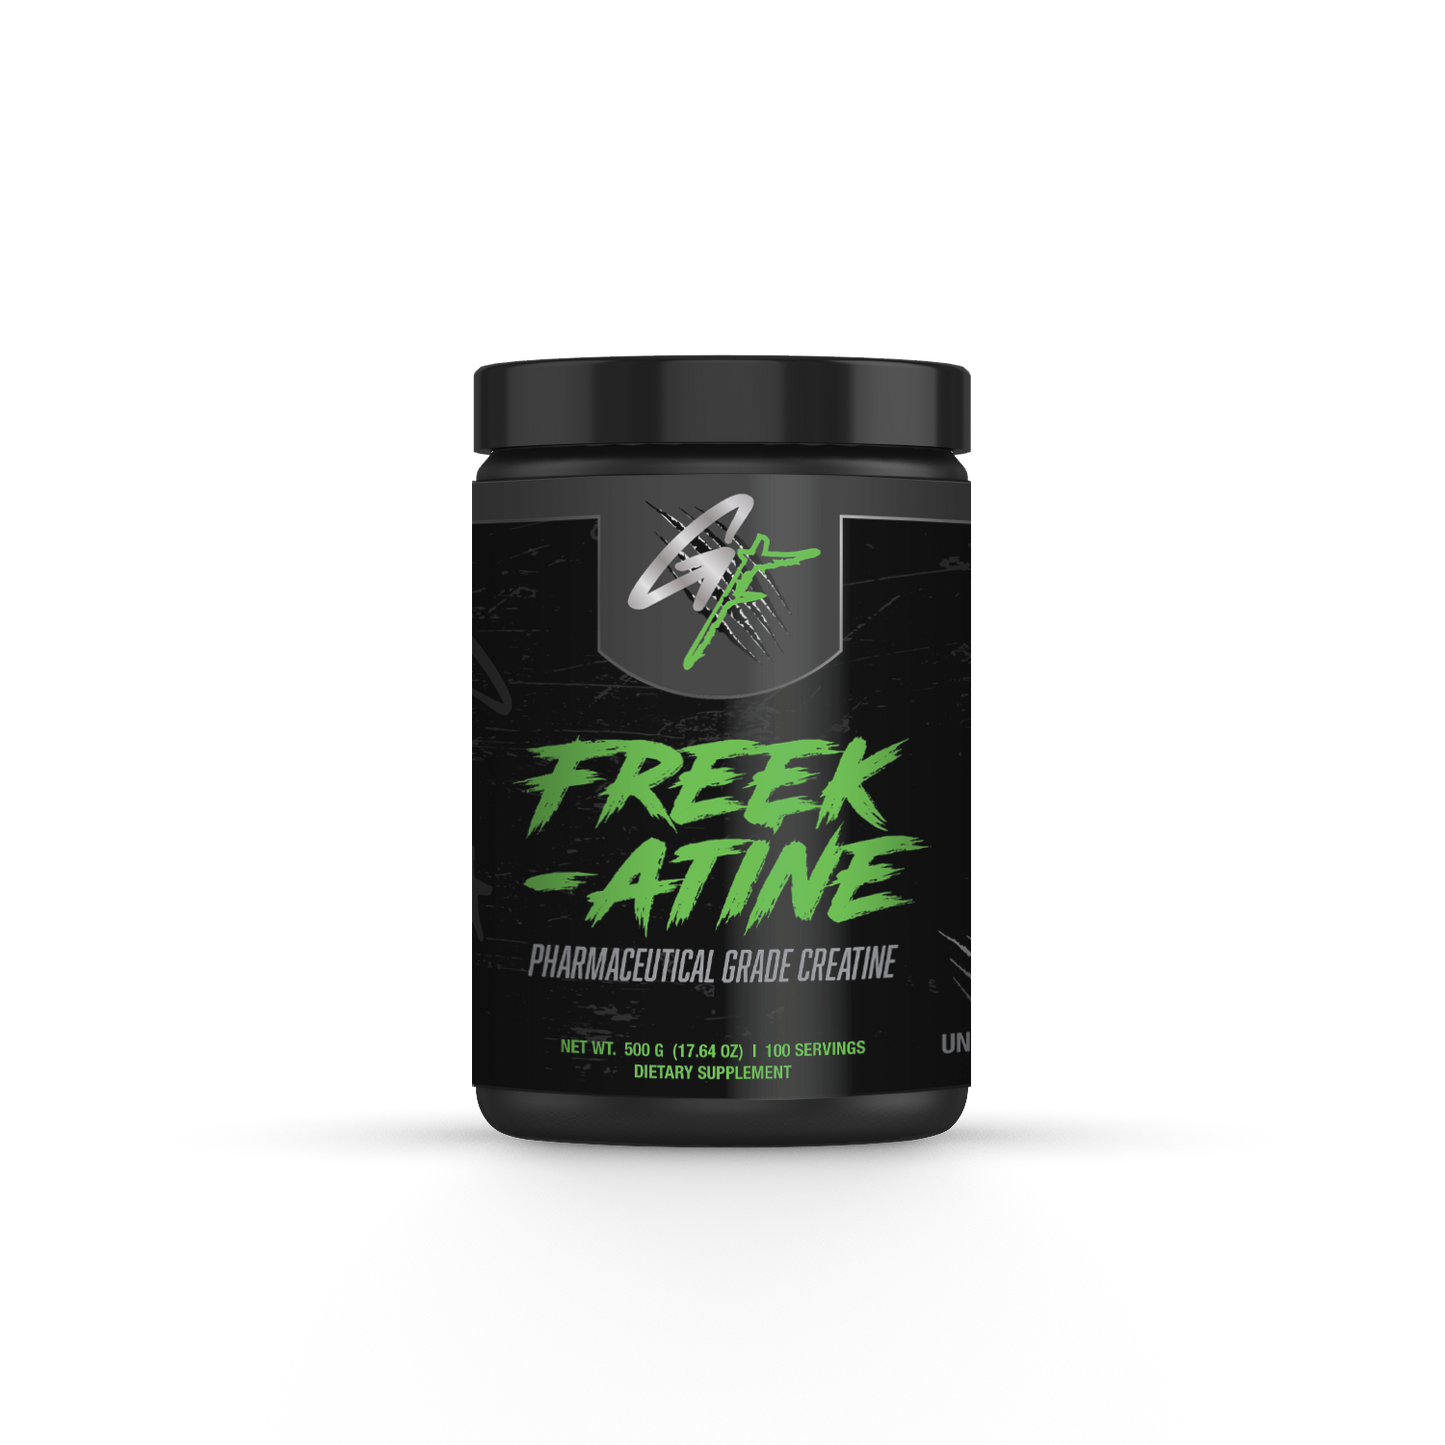 Freek-atine Creatine Monohydrate